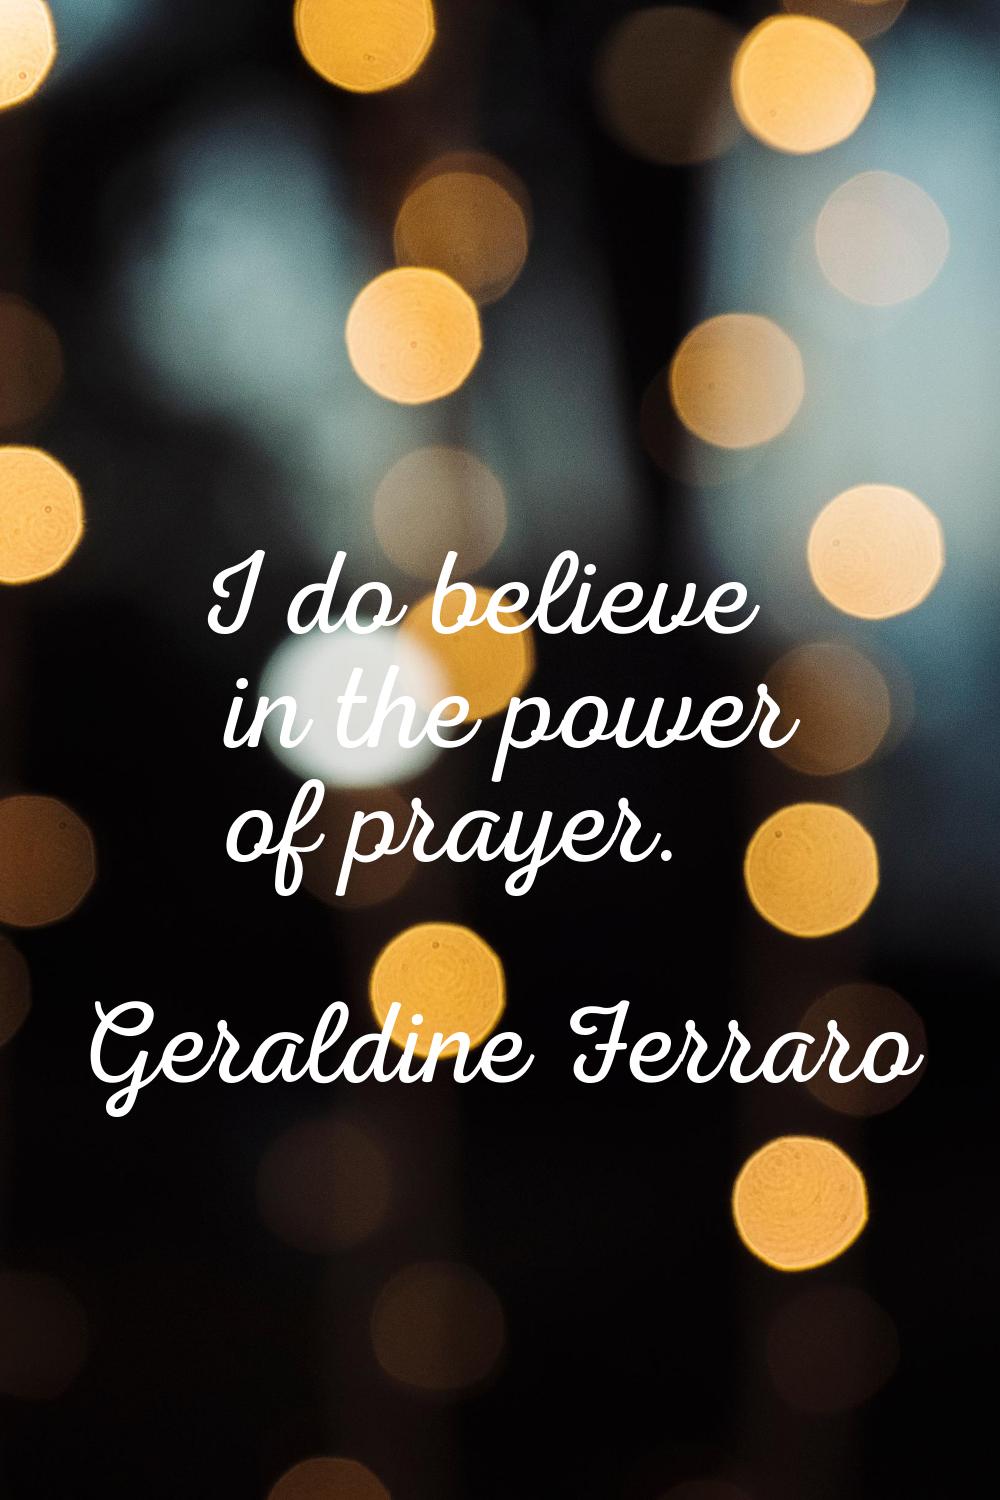 I do believe in the power of prayer.